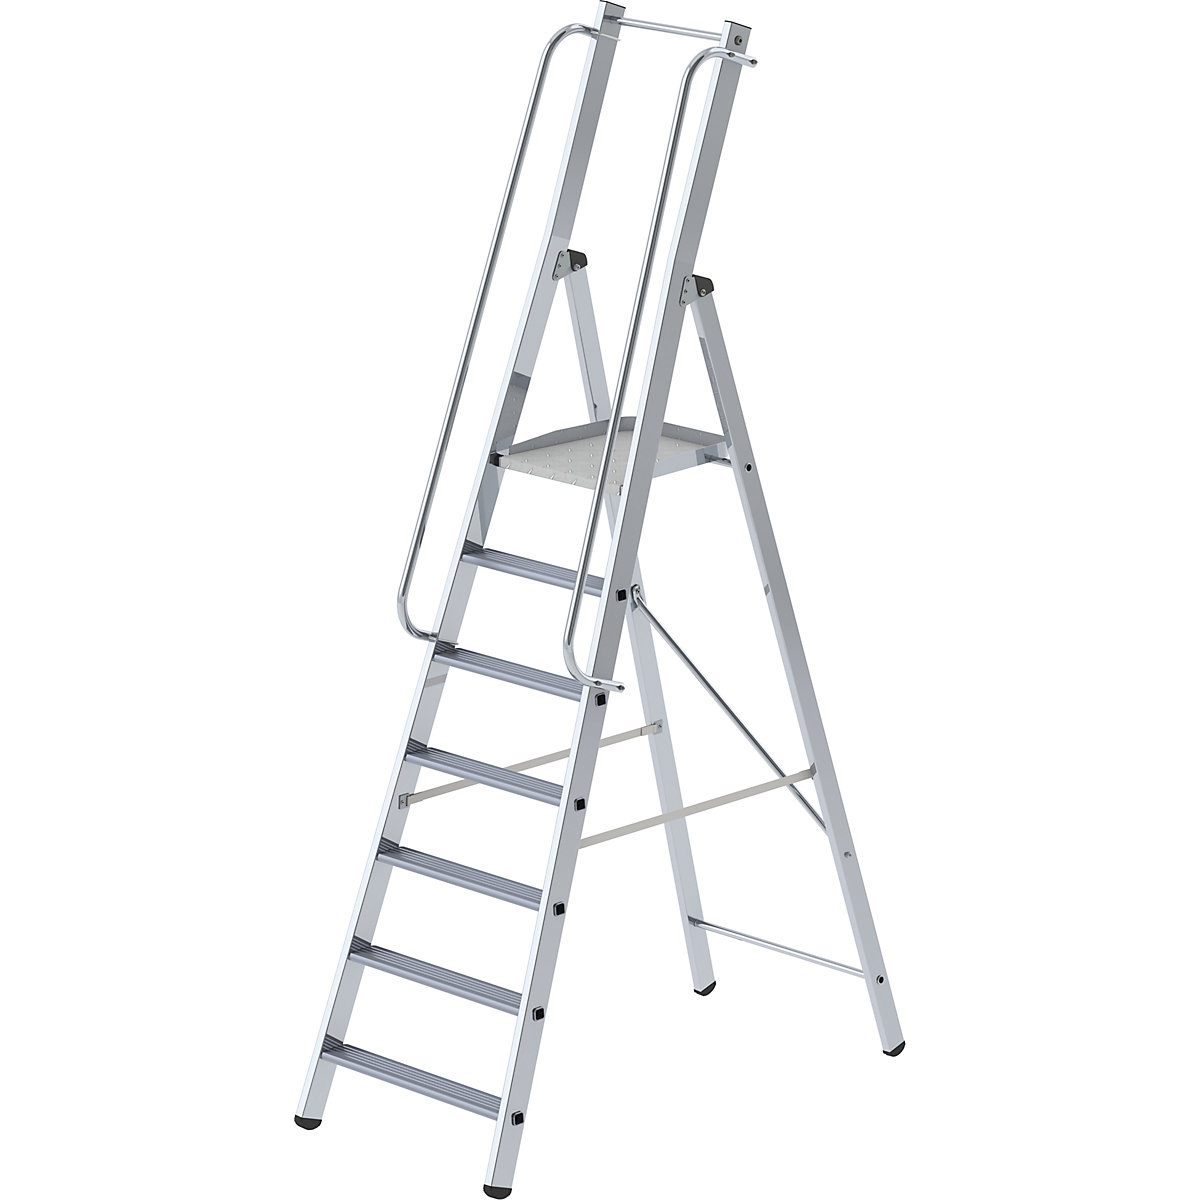 MUNK – Aluminium step ladder, single sided access, 7 steps